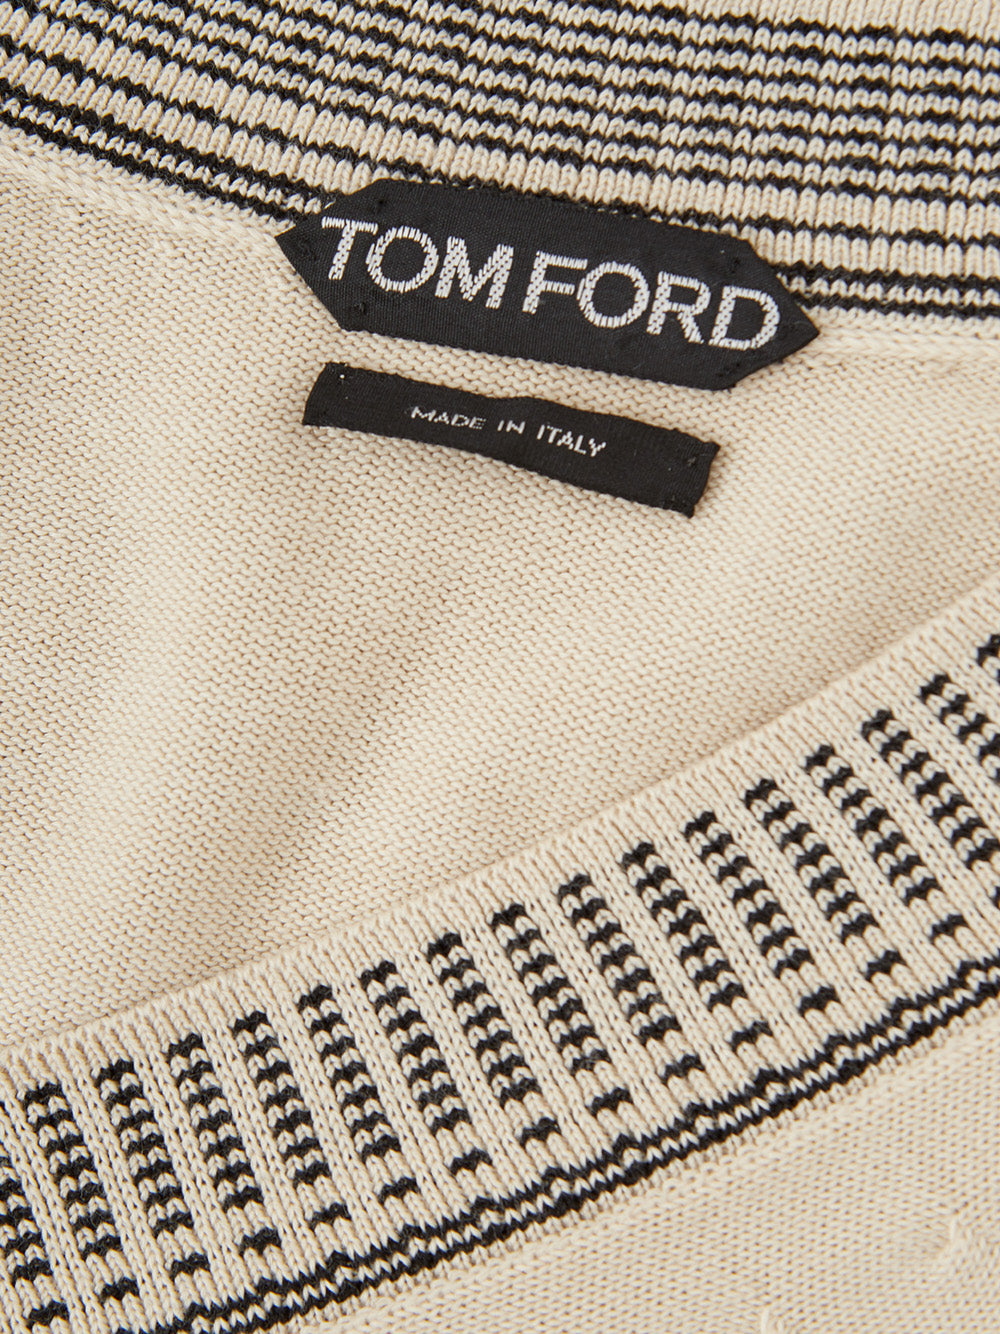 Tom Ford Jersey beige con cuello en V